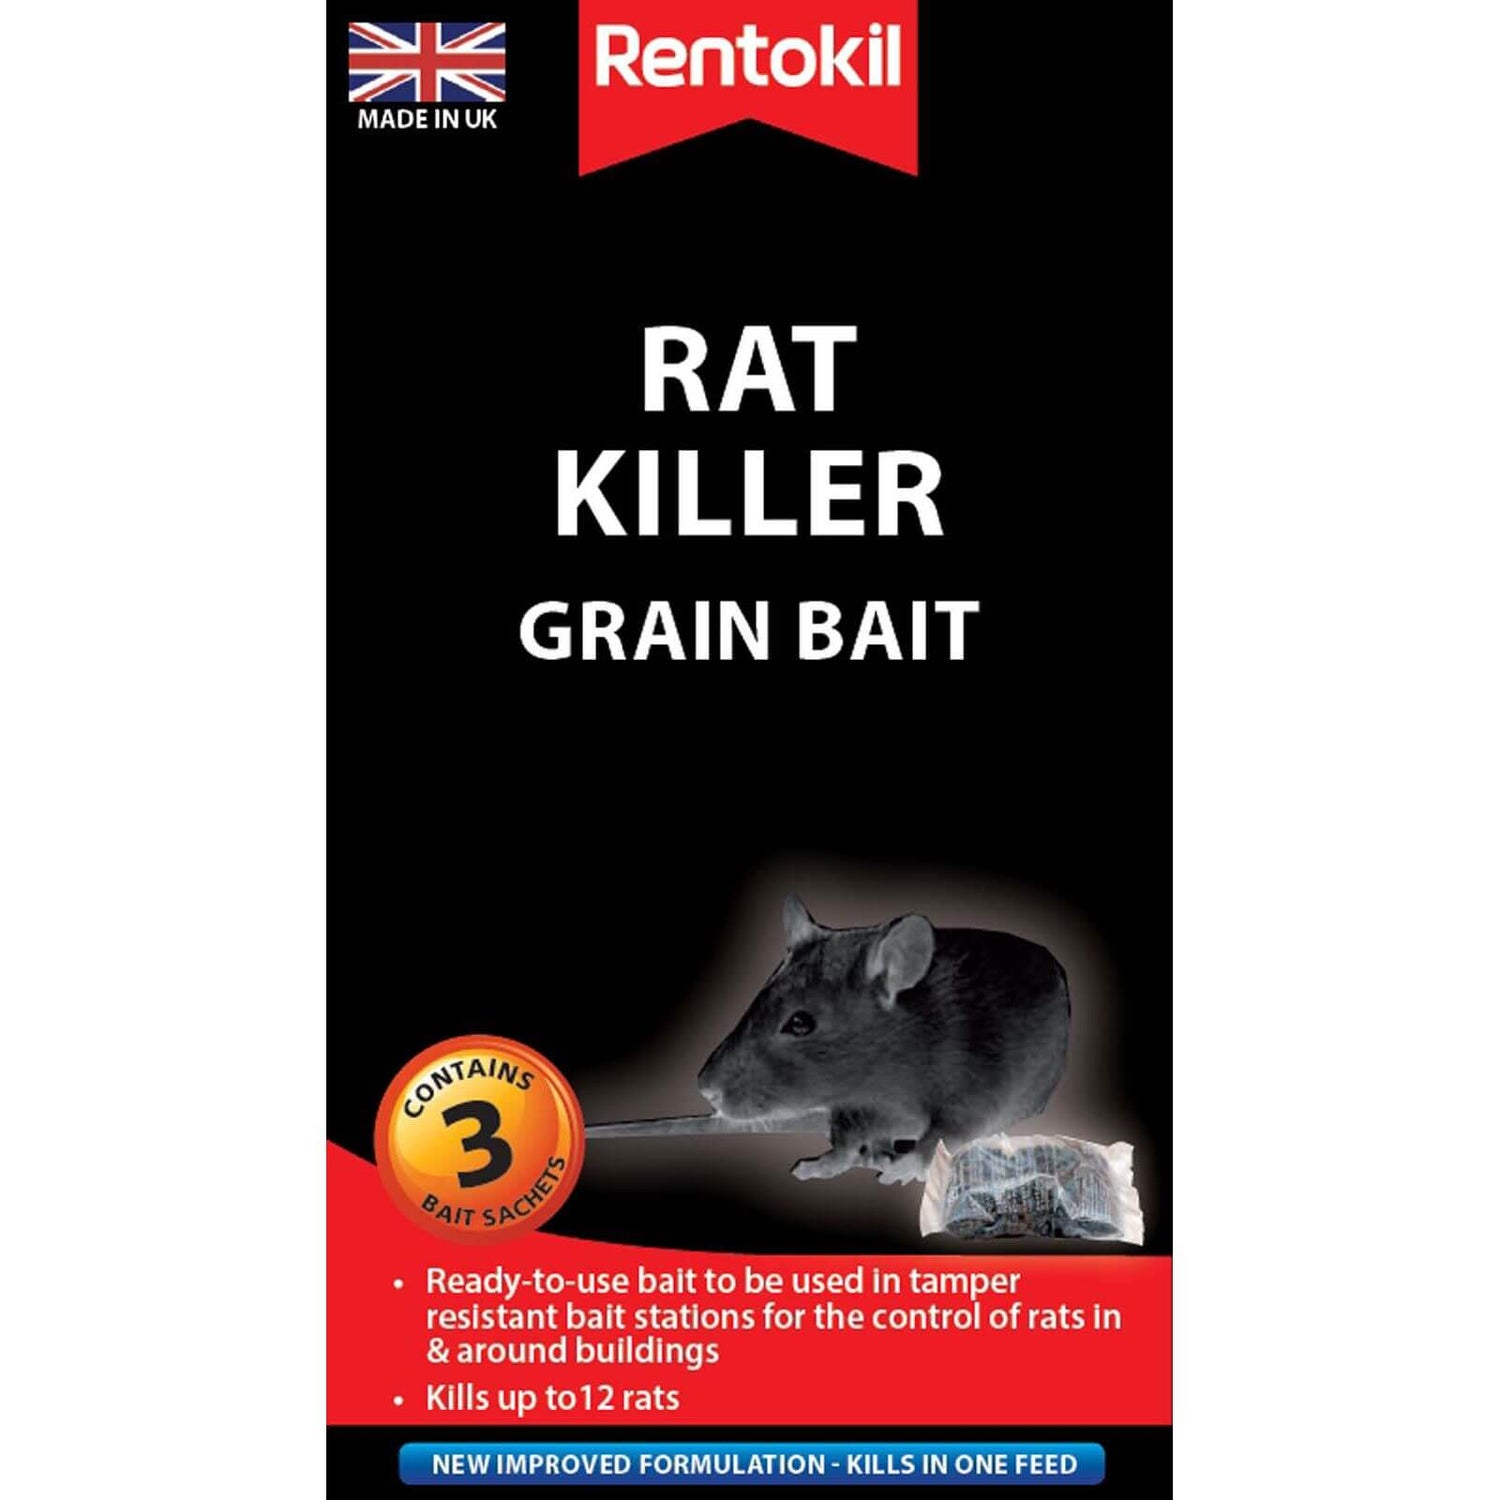 RatKil Rat Bait Box & Rat Poison For Pest Control - Large, Tamper proo